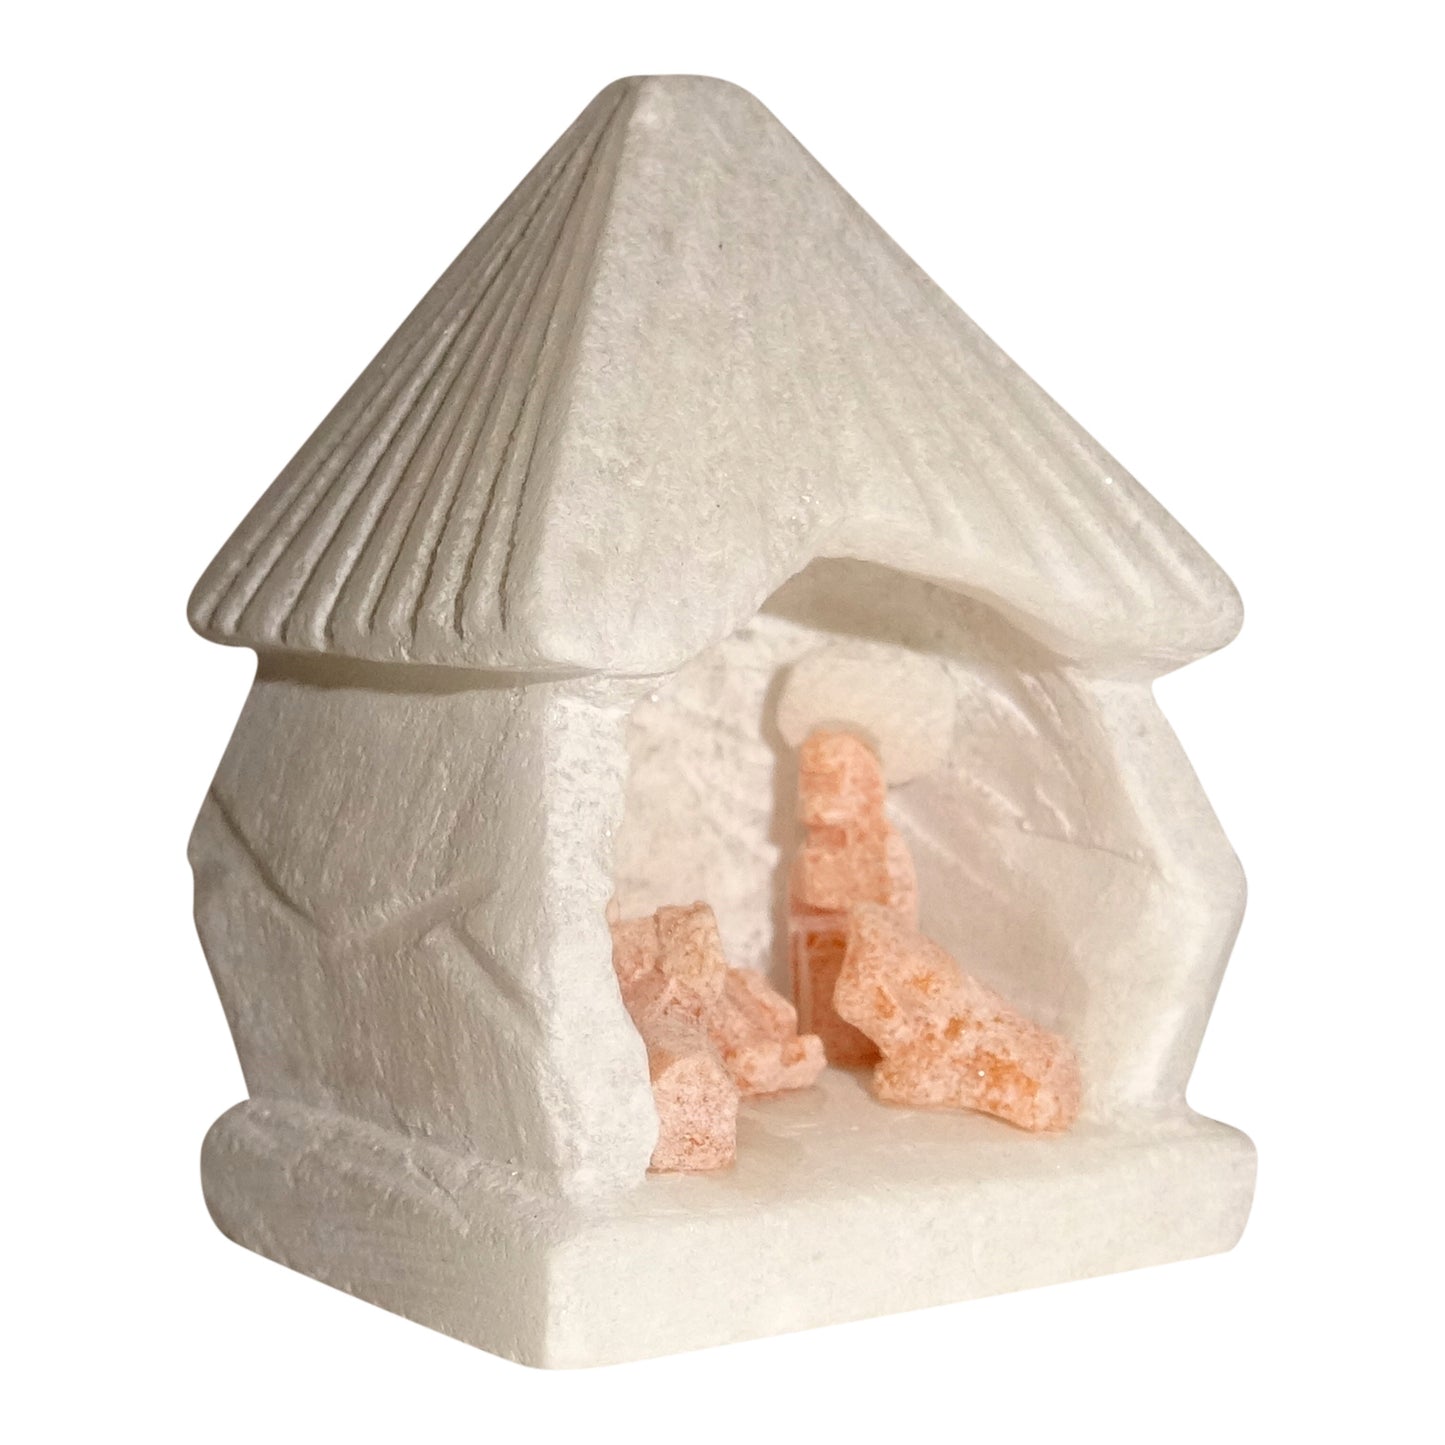 Hand Carved Huamanga Stone Tiny Pink Nativity Scene Figurines Inside White Hut